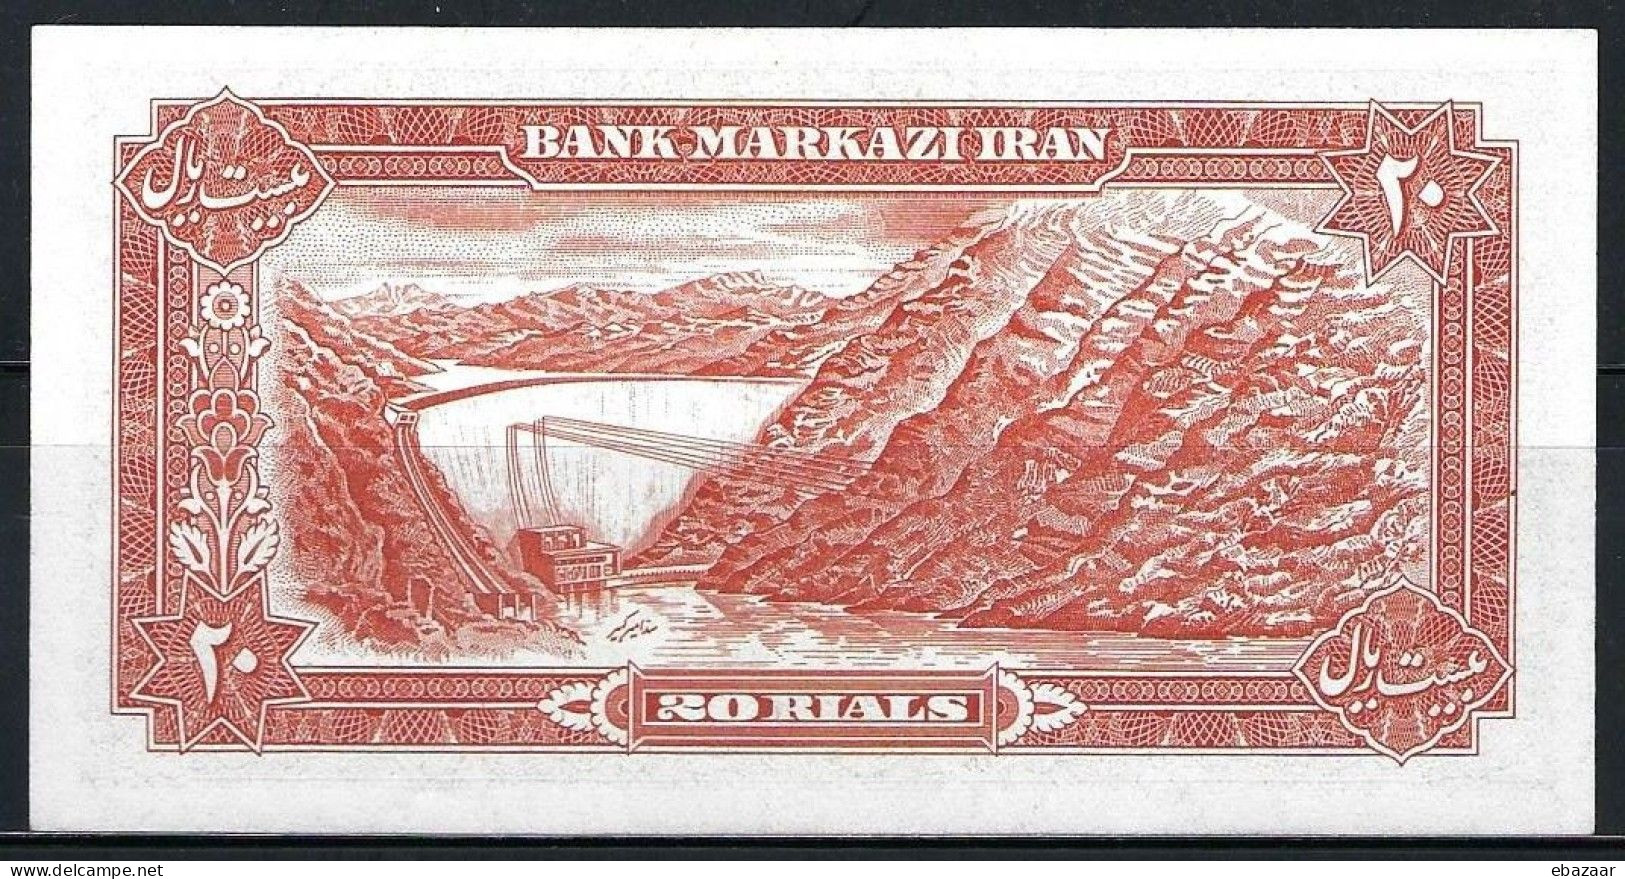 Iran 1974-1979 (Bank Markazi Iran) Banknote 20 Rial P-100b Fourteenth Issue UNC + FREE GIFT - Irán